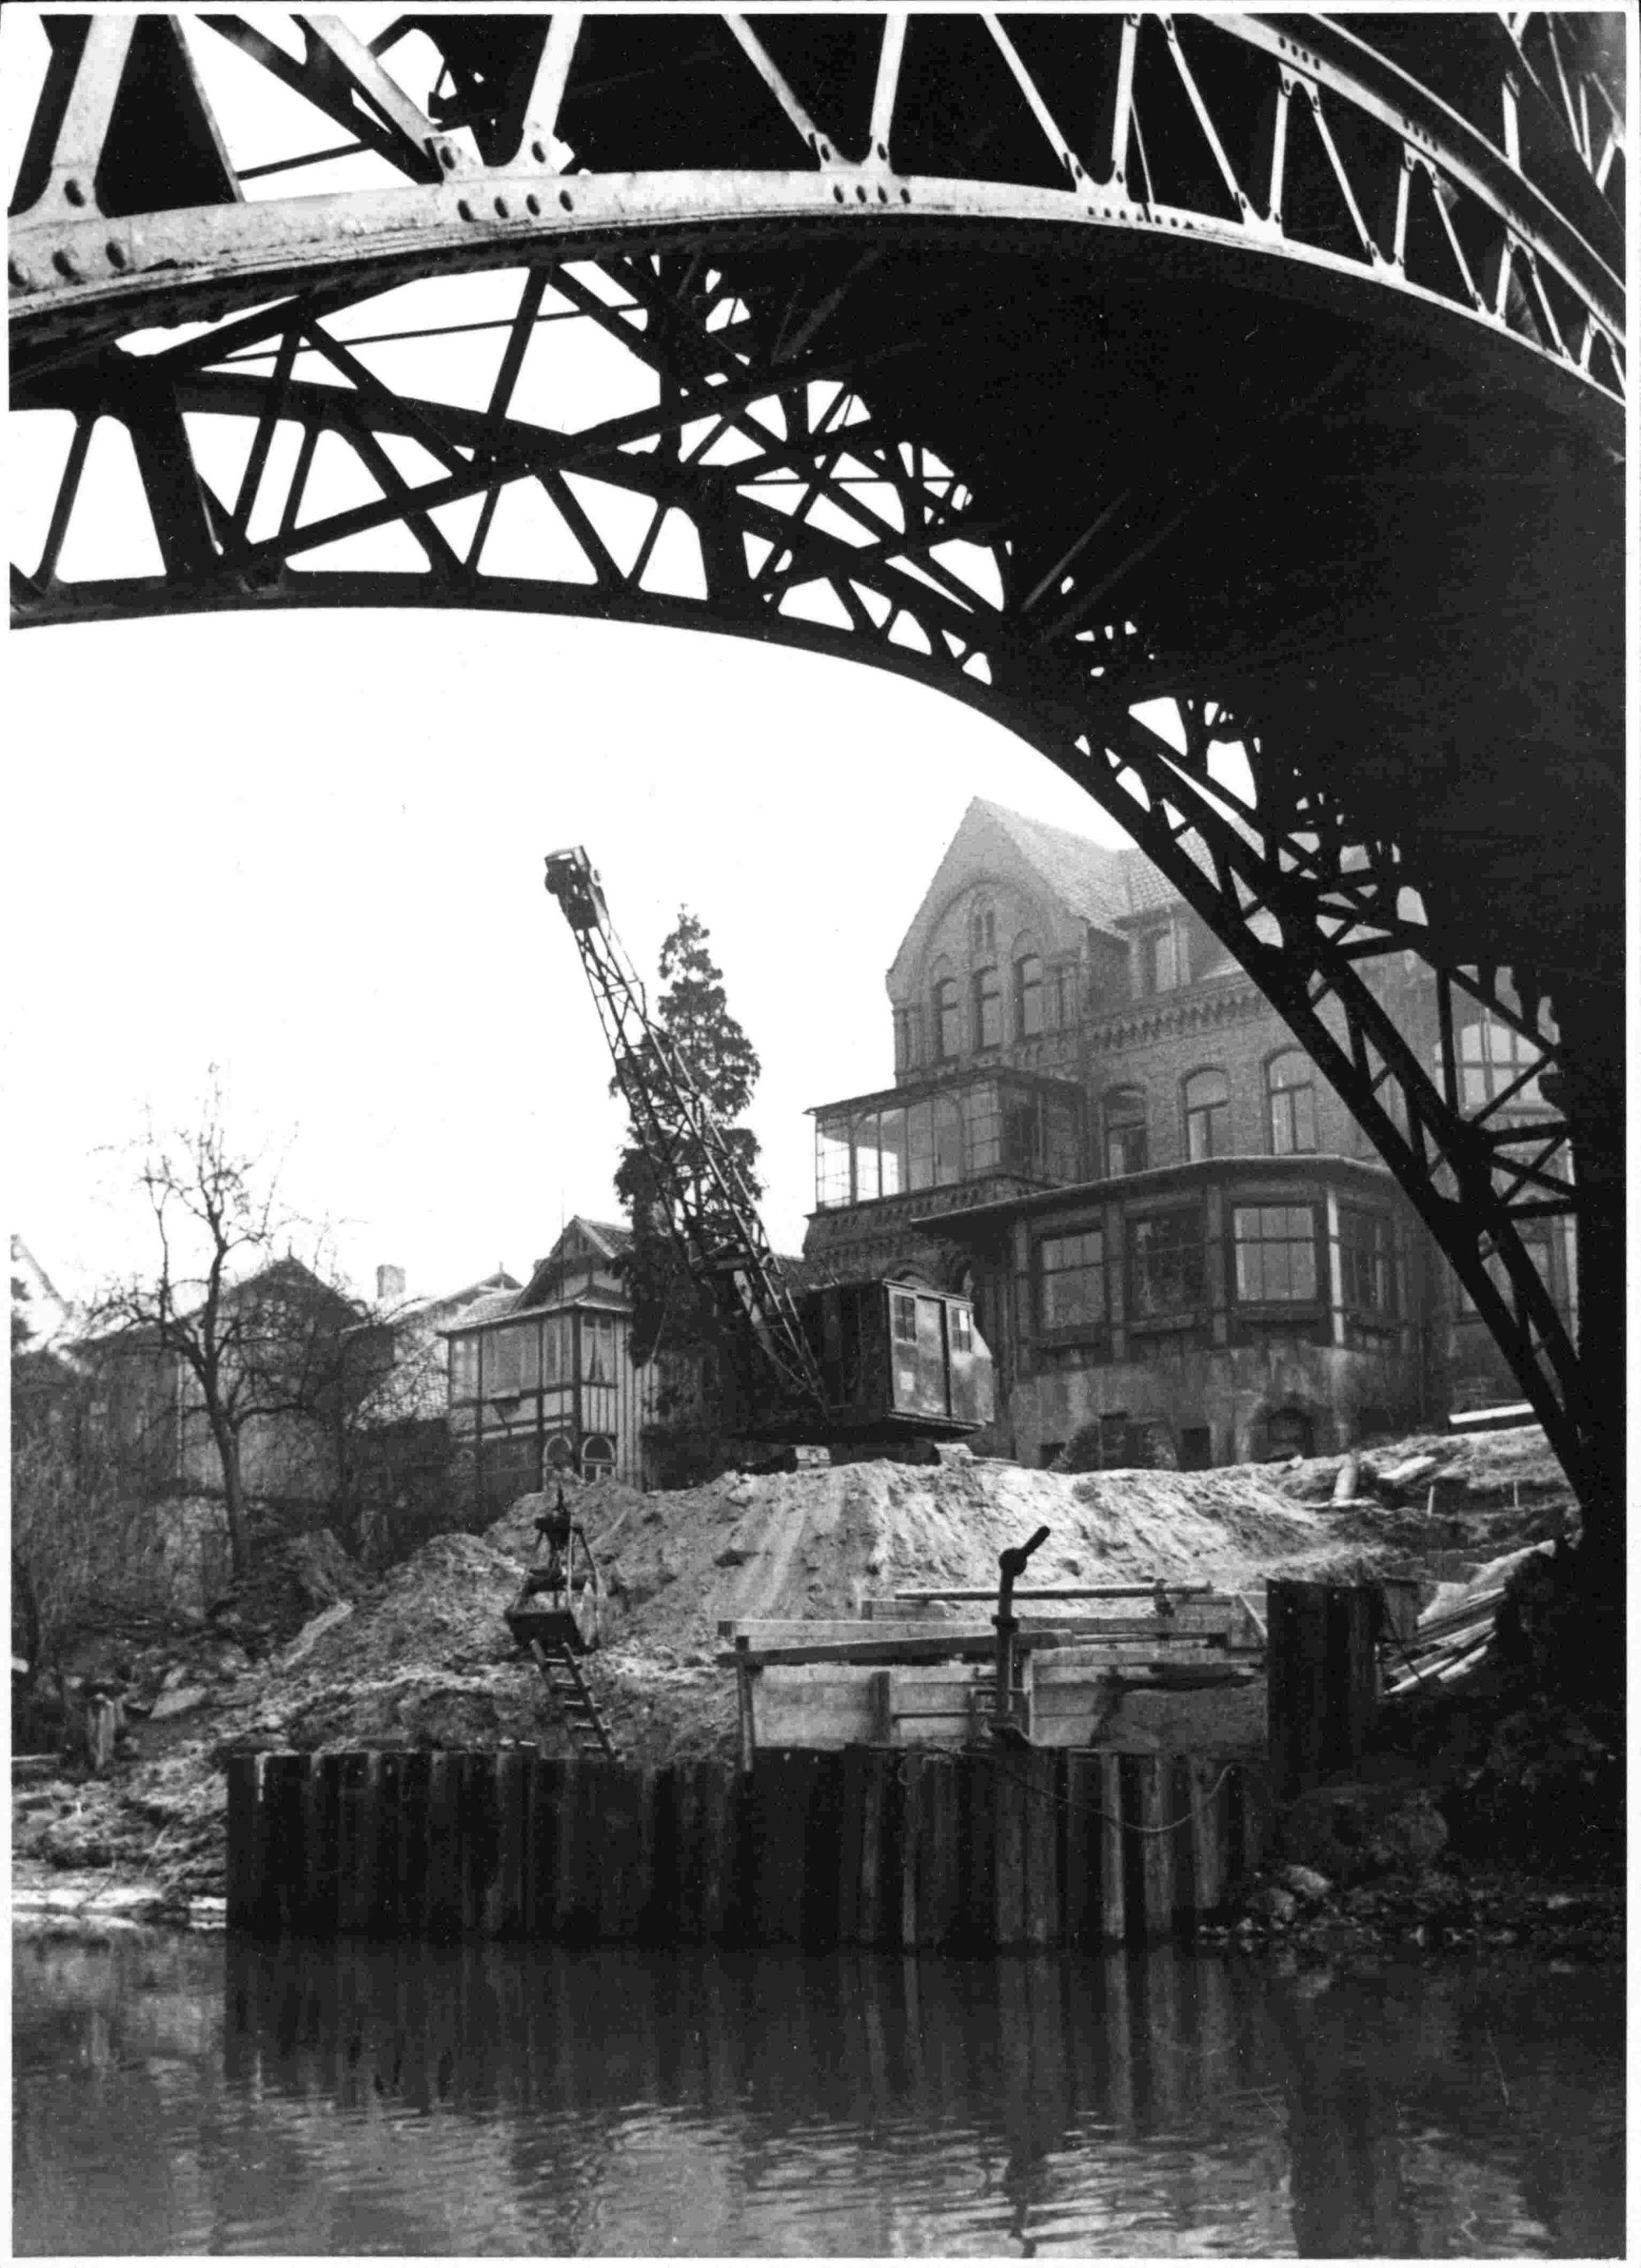 Ottmerbrücke, Baubeginn der Brücke Kurt-Schumacher-Straße, 1958